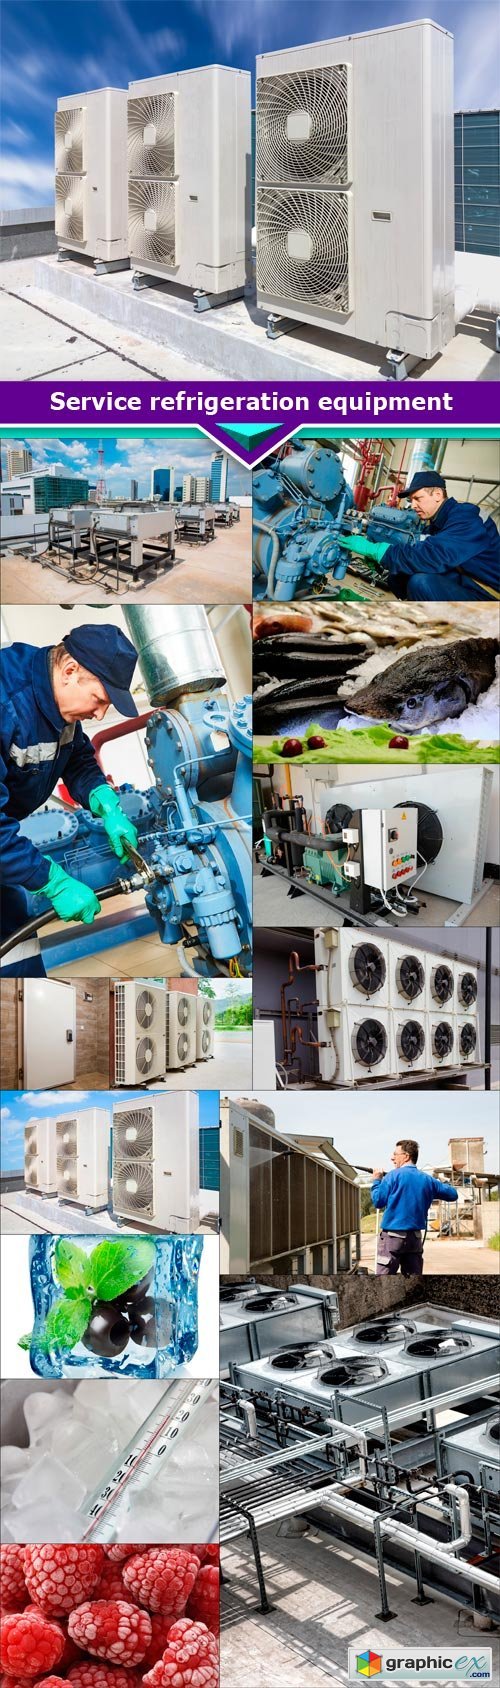 Service of industrial refrigeration equipment compressors 15x JPEG